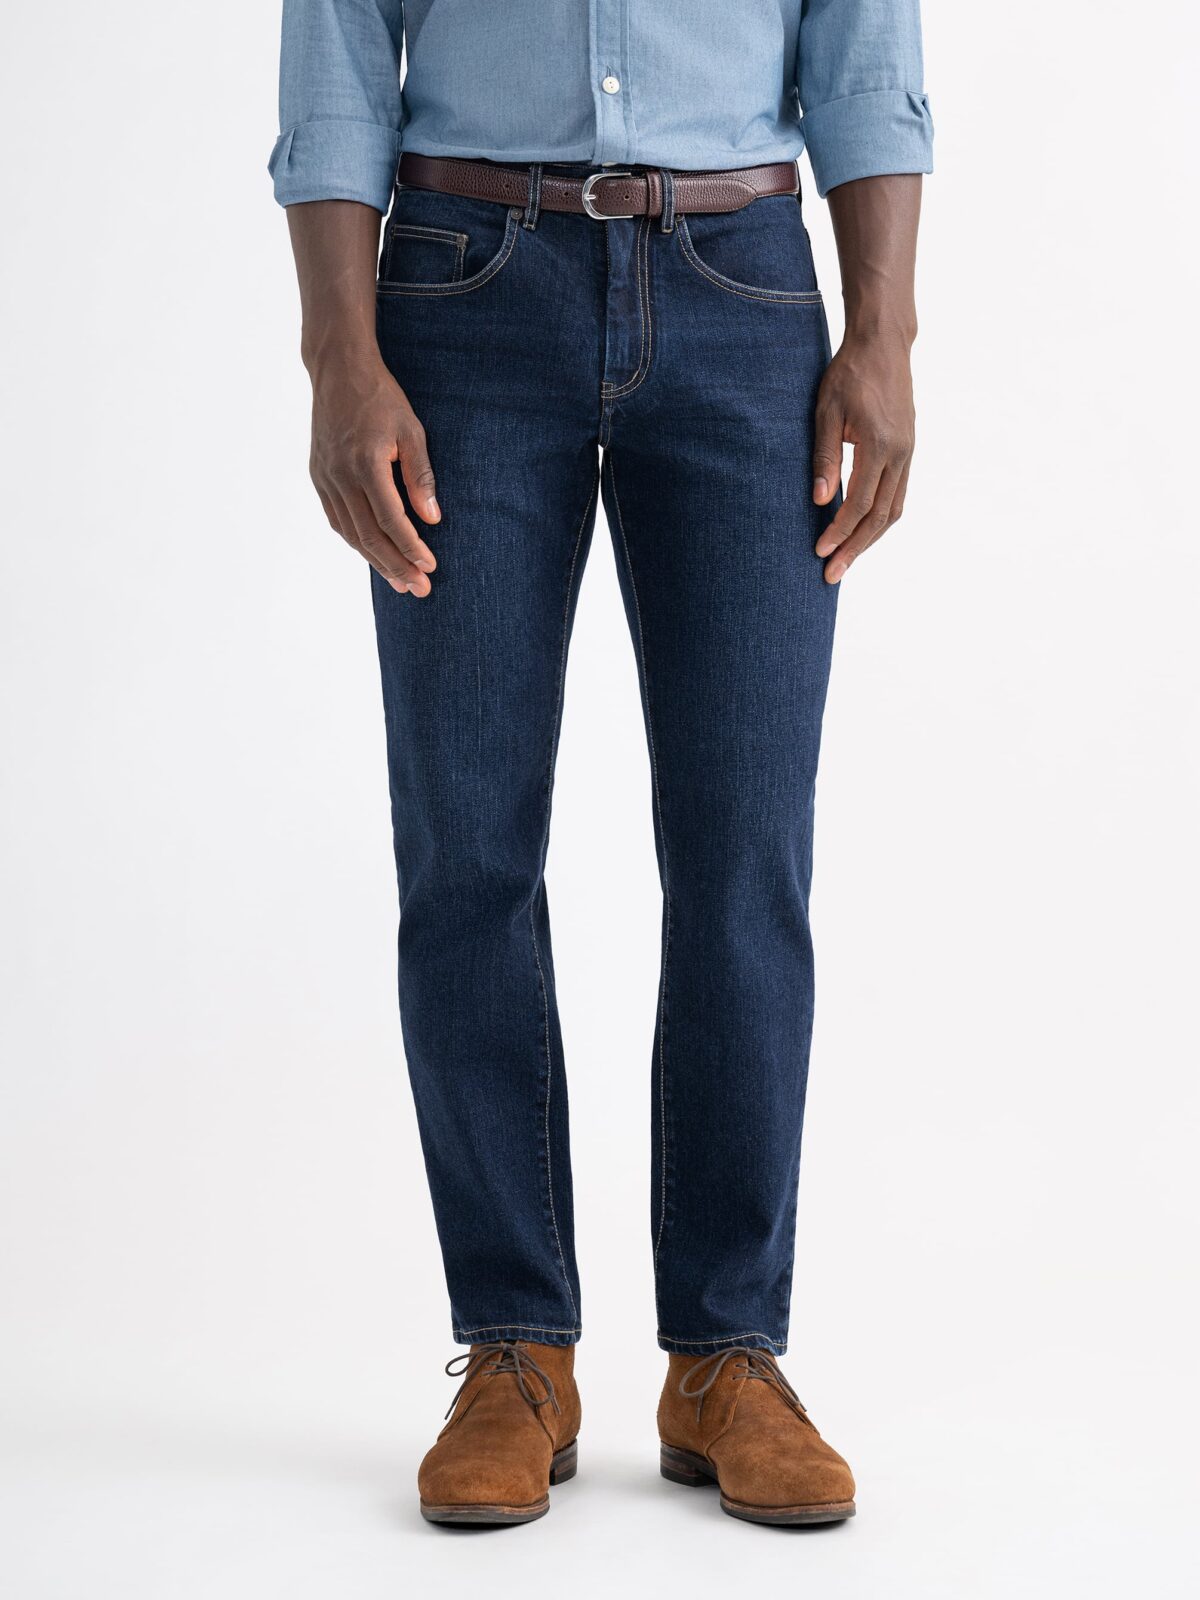 Men's Dark Wash Slim Straight Jeans, Men's Bottoms